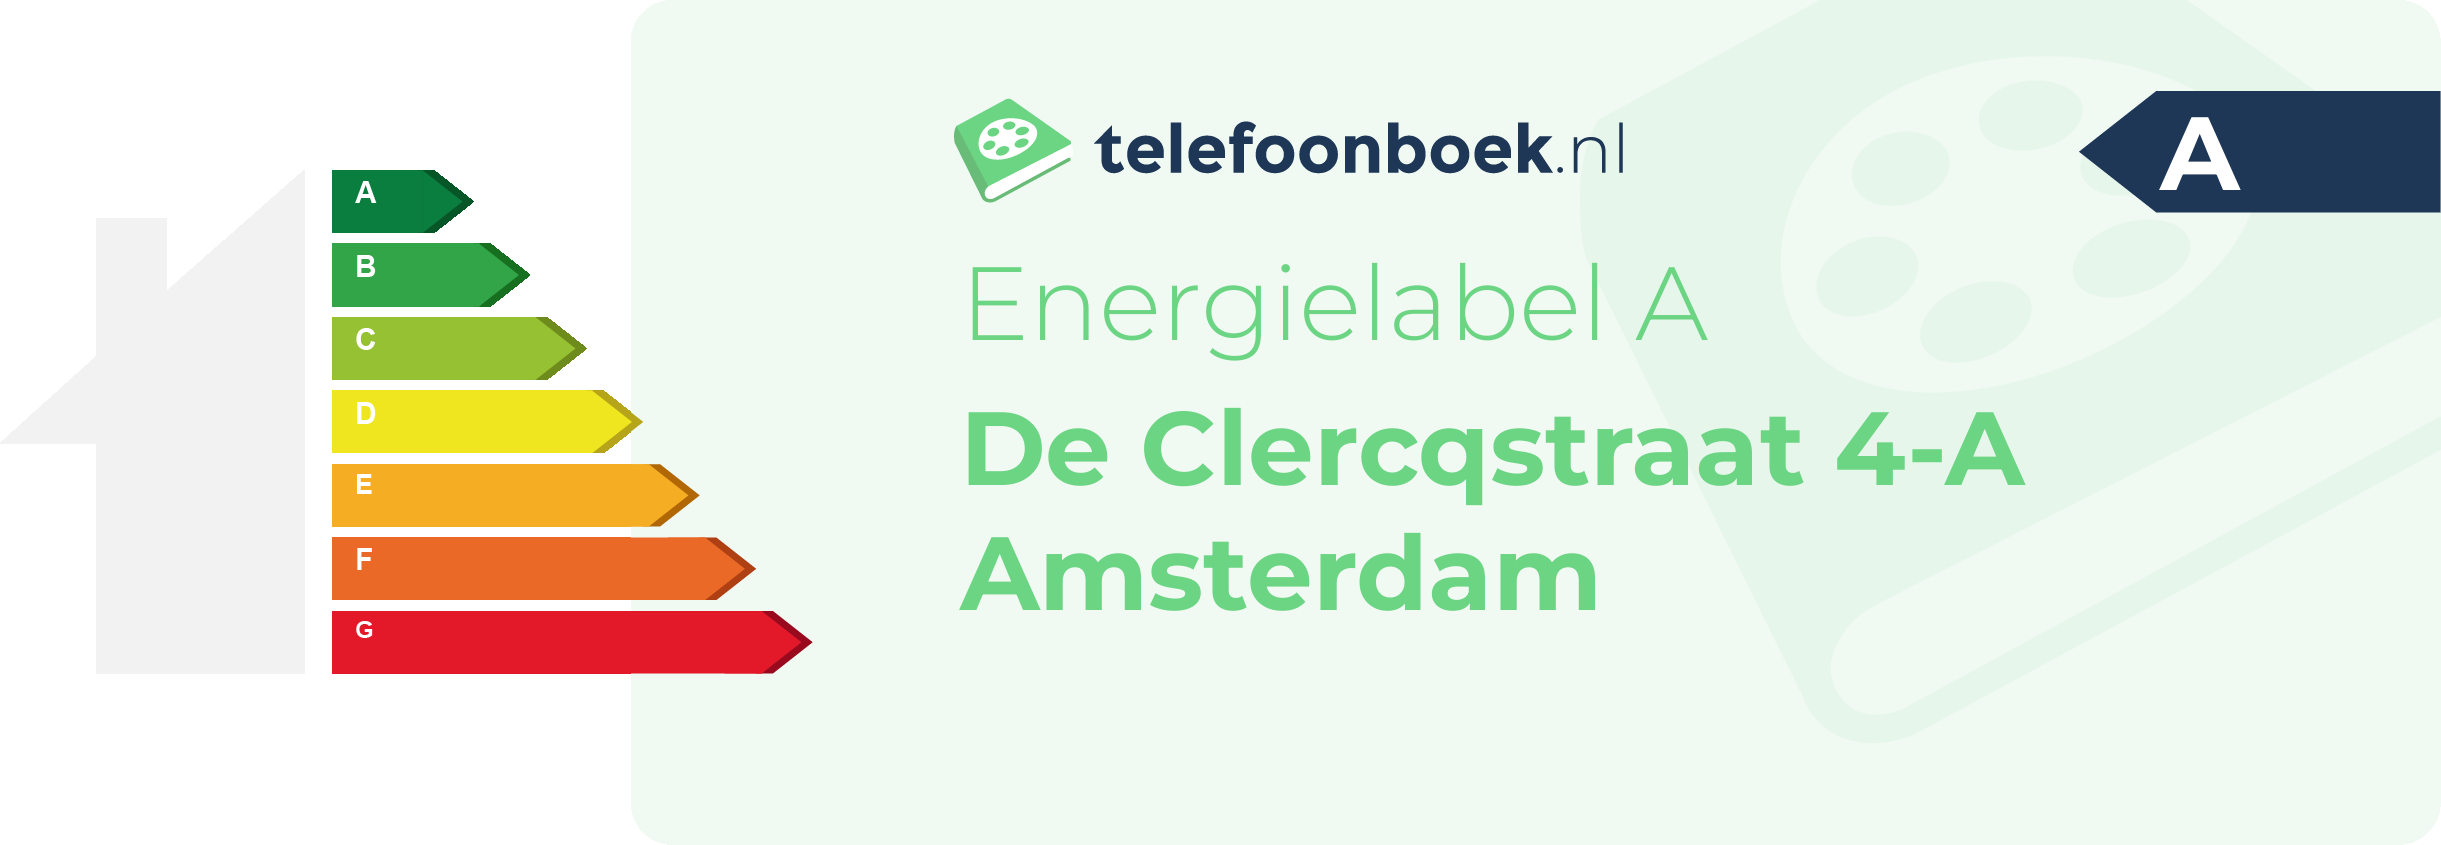 Energielabel De Clercqstraat 4-A Amsterdam